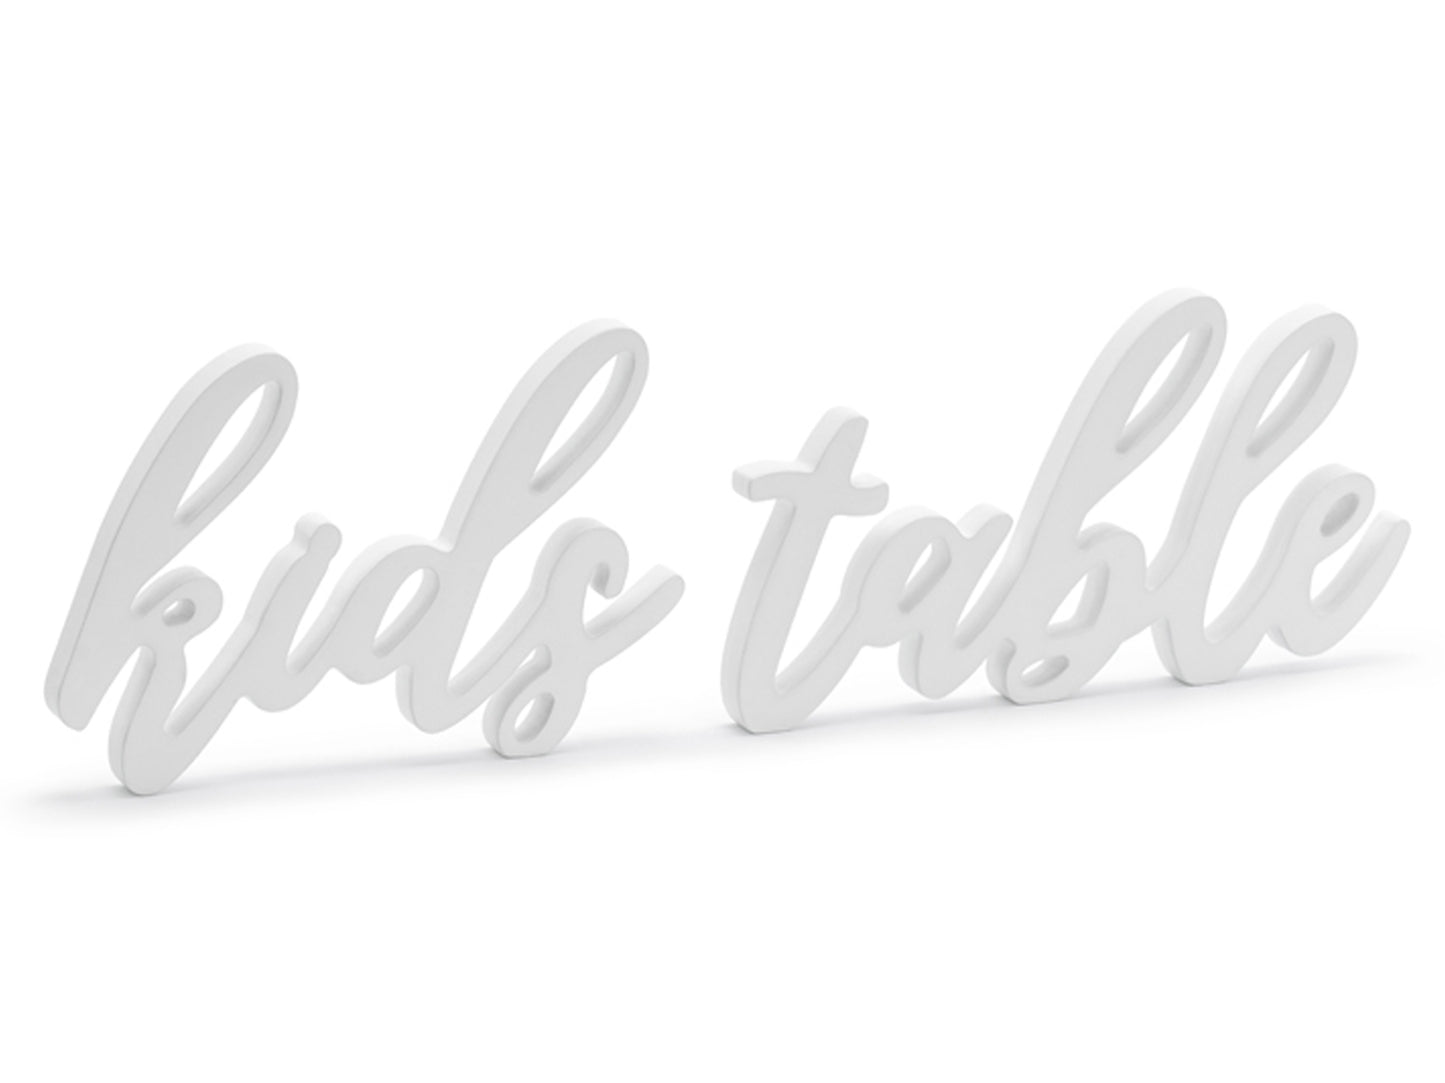 White Wooden 'Kids Table' Script Sign